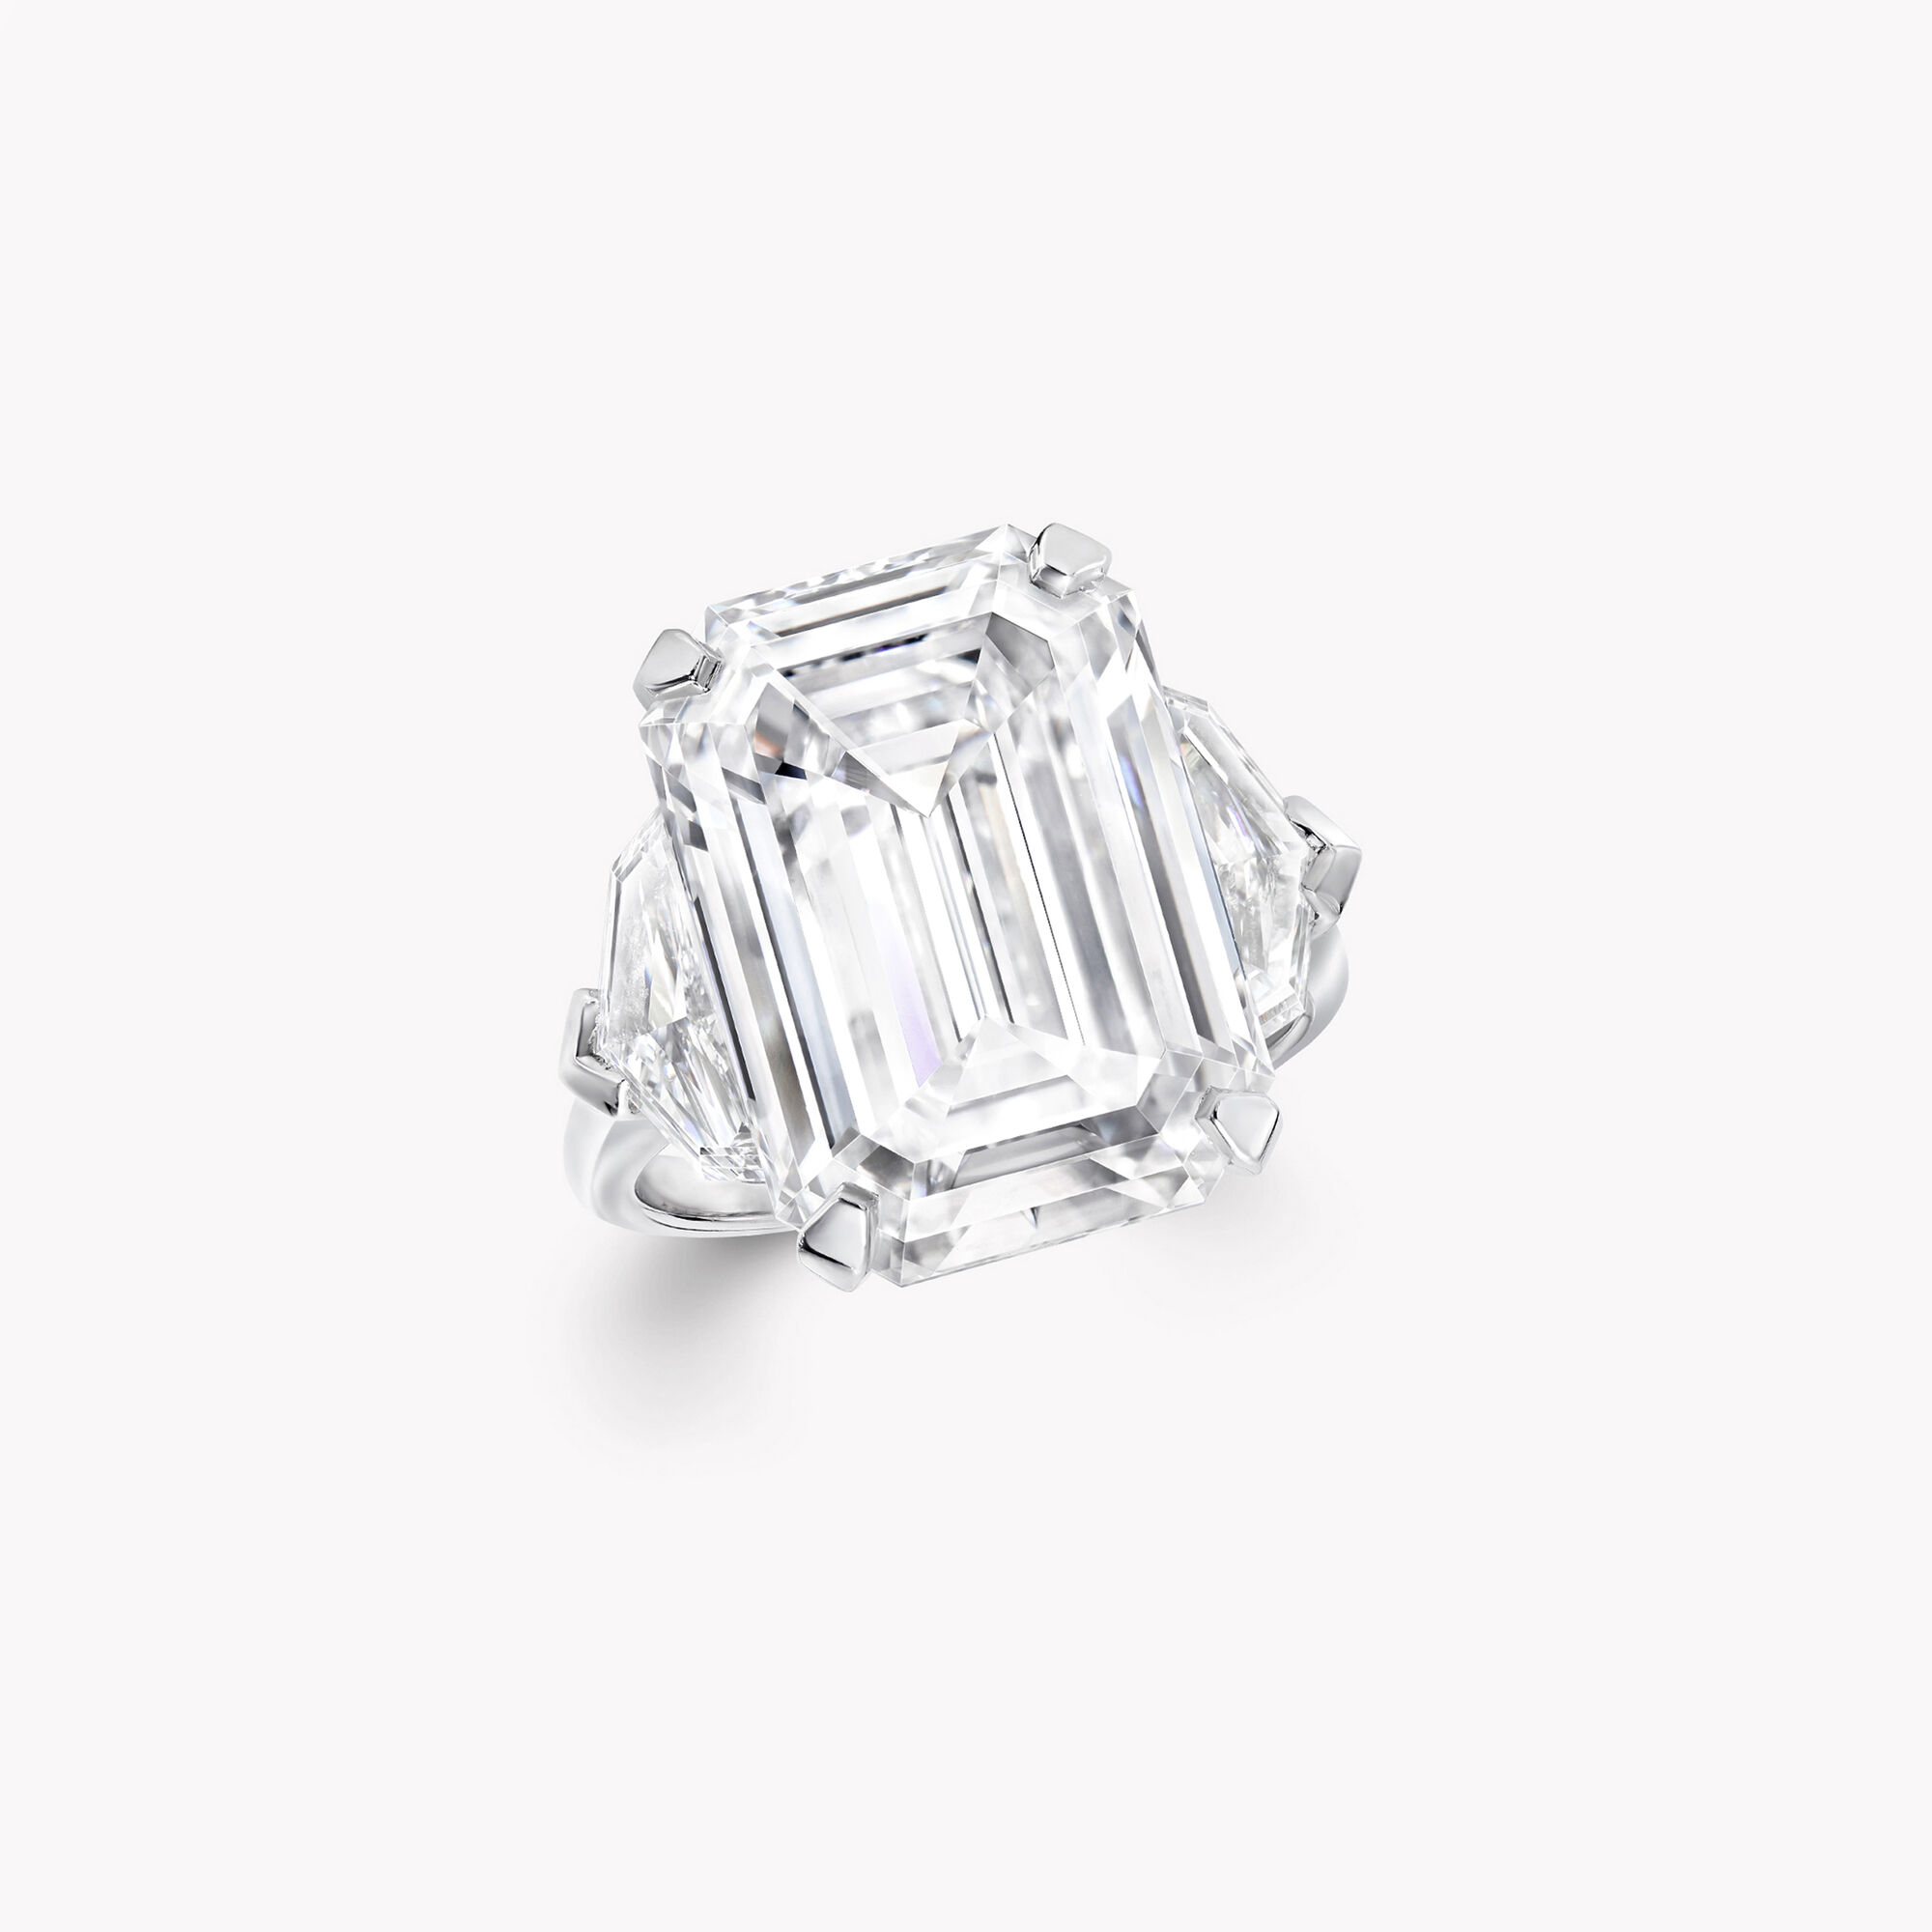 13.20 carat D Flawless emerald cut diamond high jewellery ring, cut and